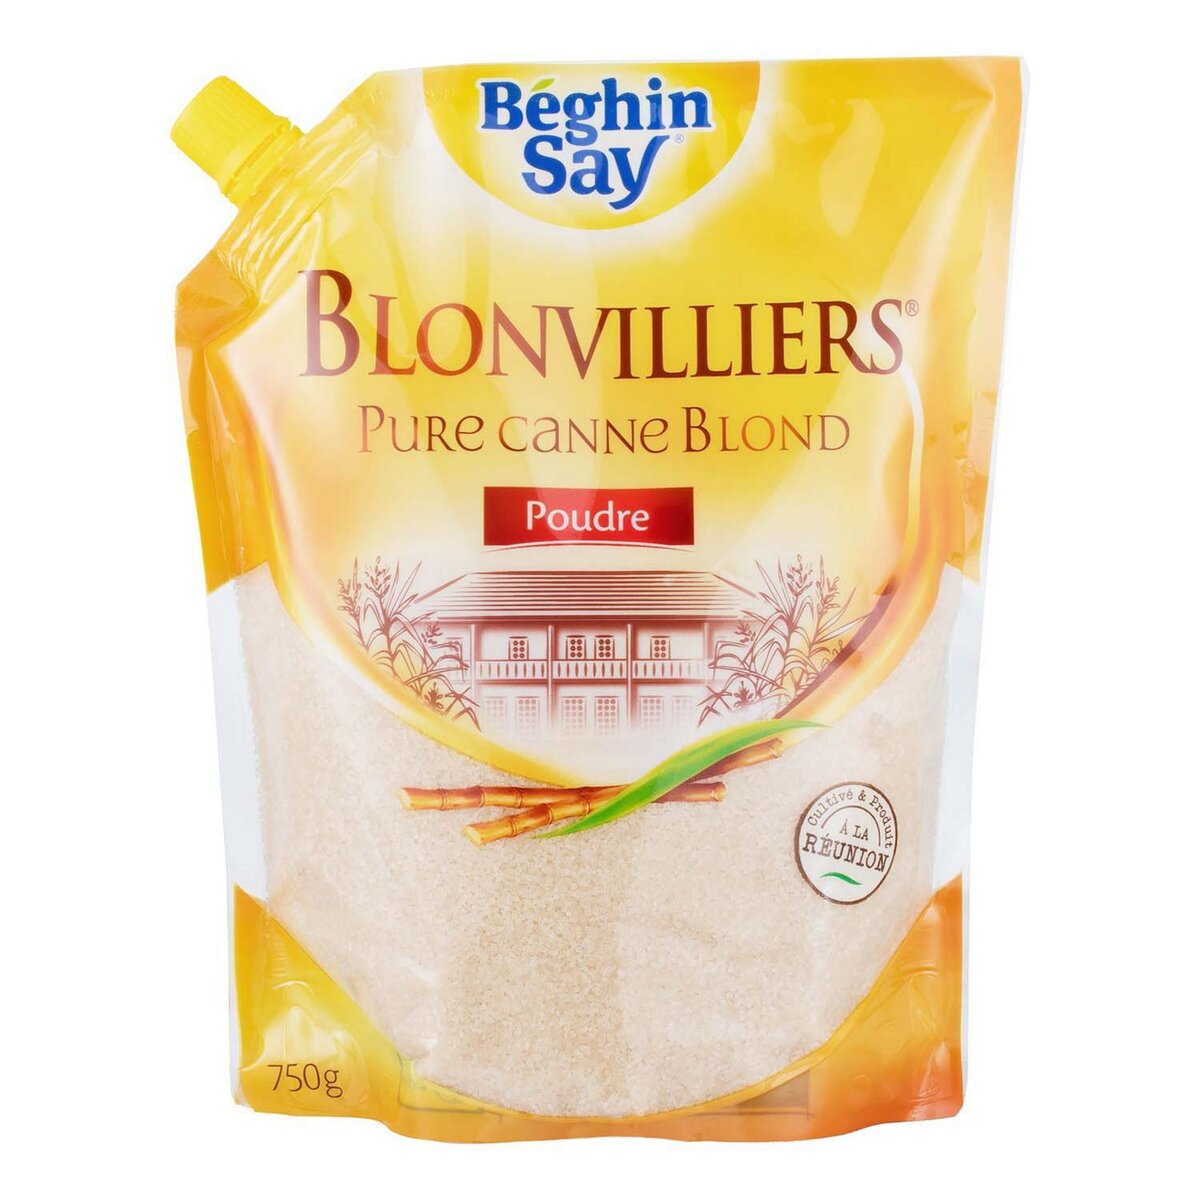 BEGHIN SAY Blonvilliers sucre pure canne blond en poudre 750g